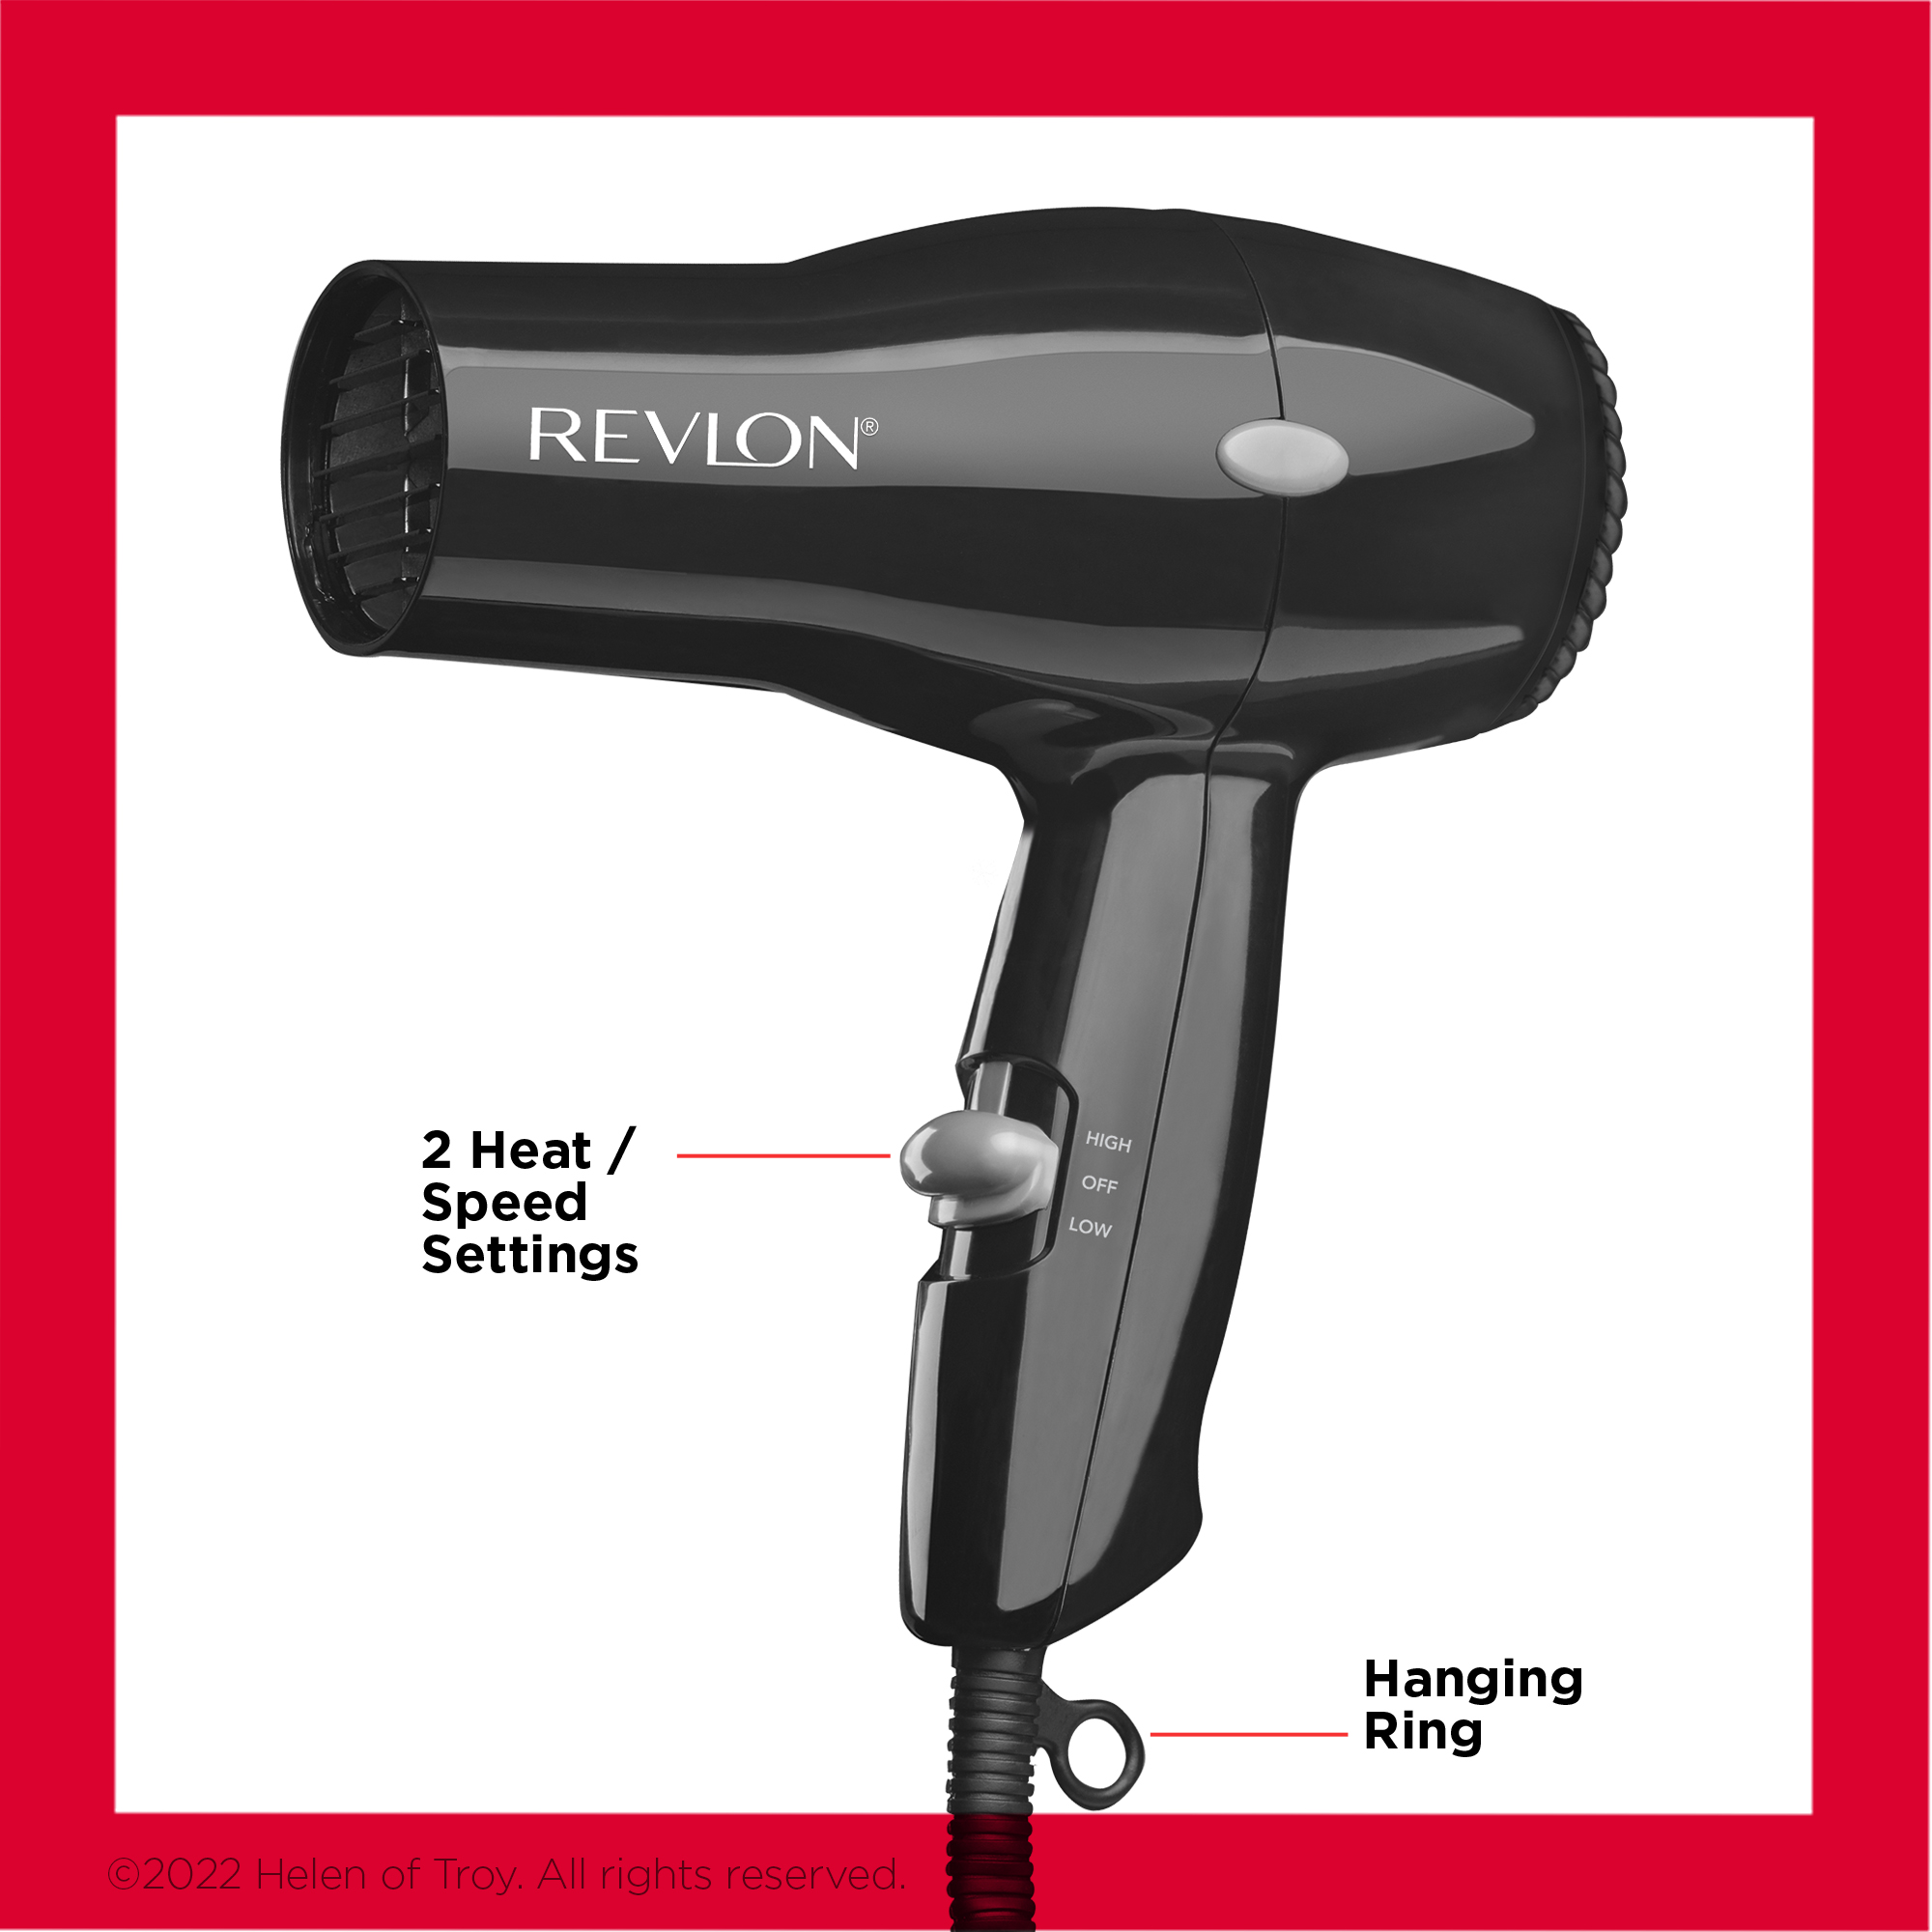 Revlon 1875W Compact Hair Dryer, Black - image 4 of 5